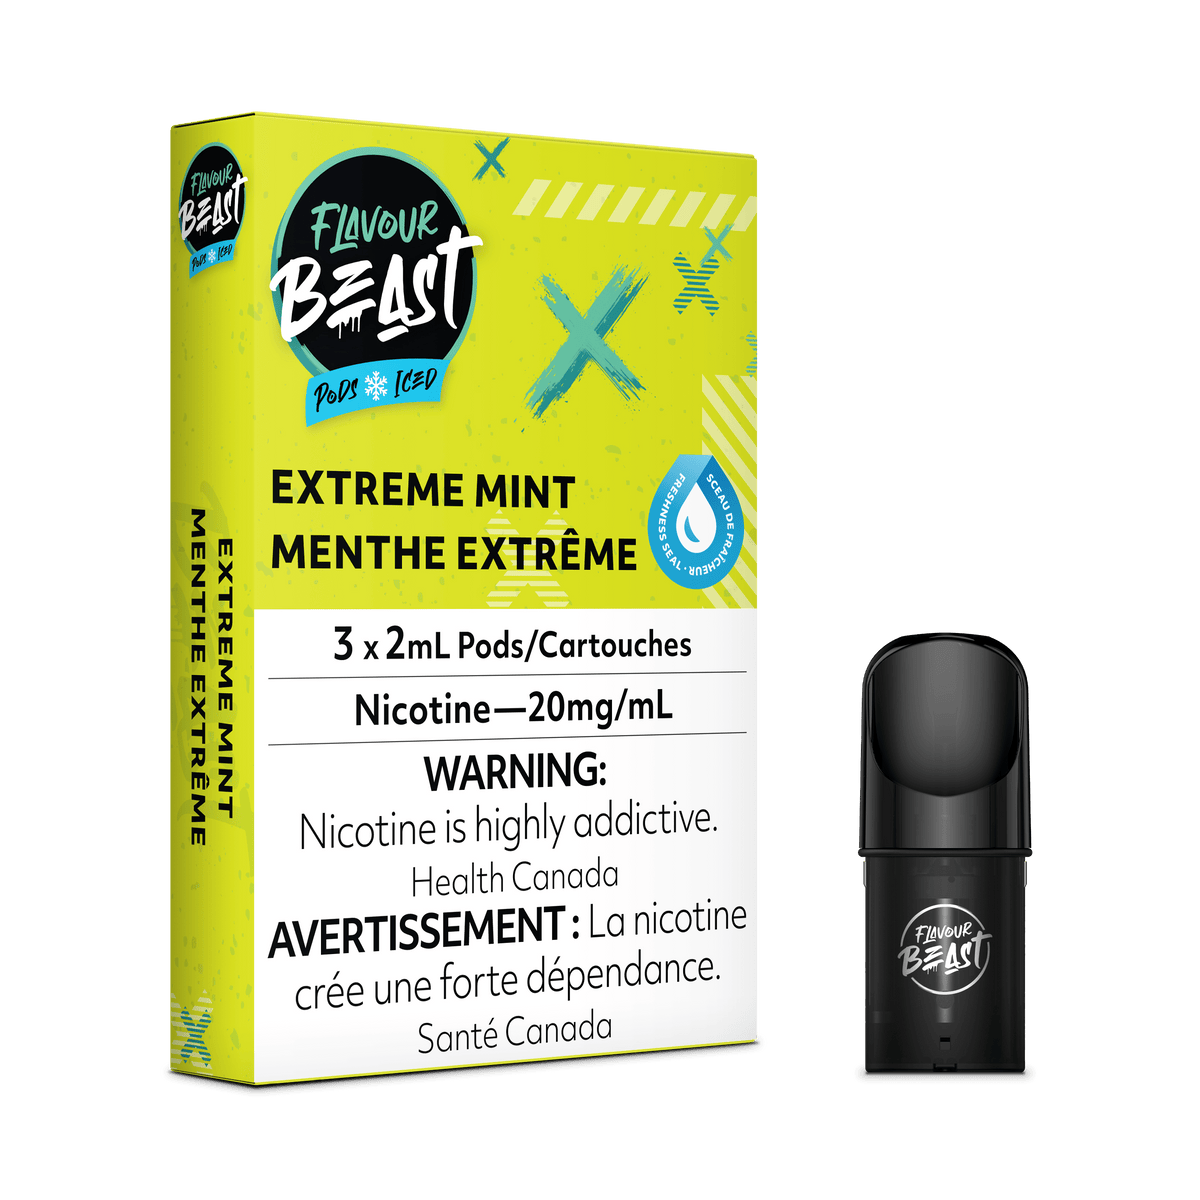 Flavour Beast Vape Pod - Extreme Mint Iced available on Canada online vape shop